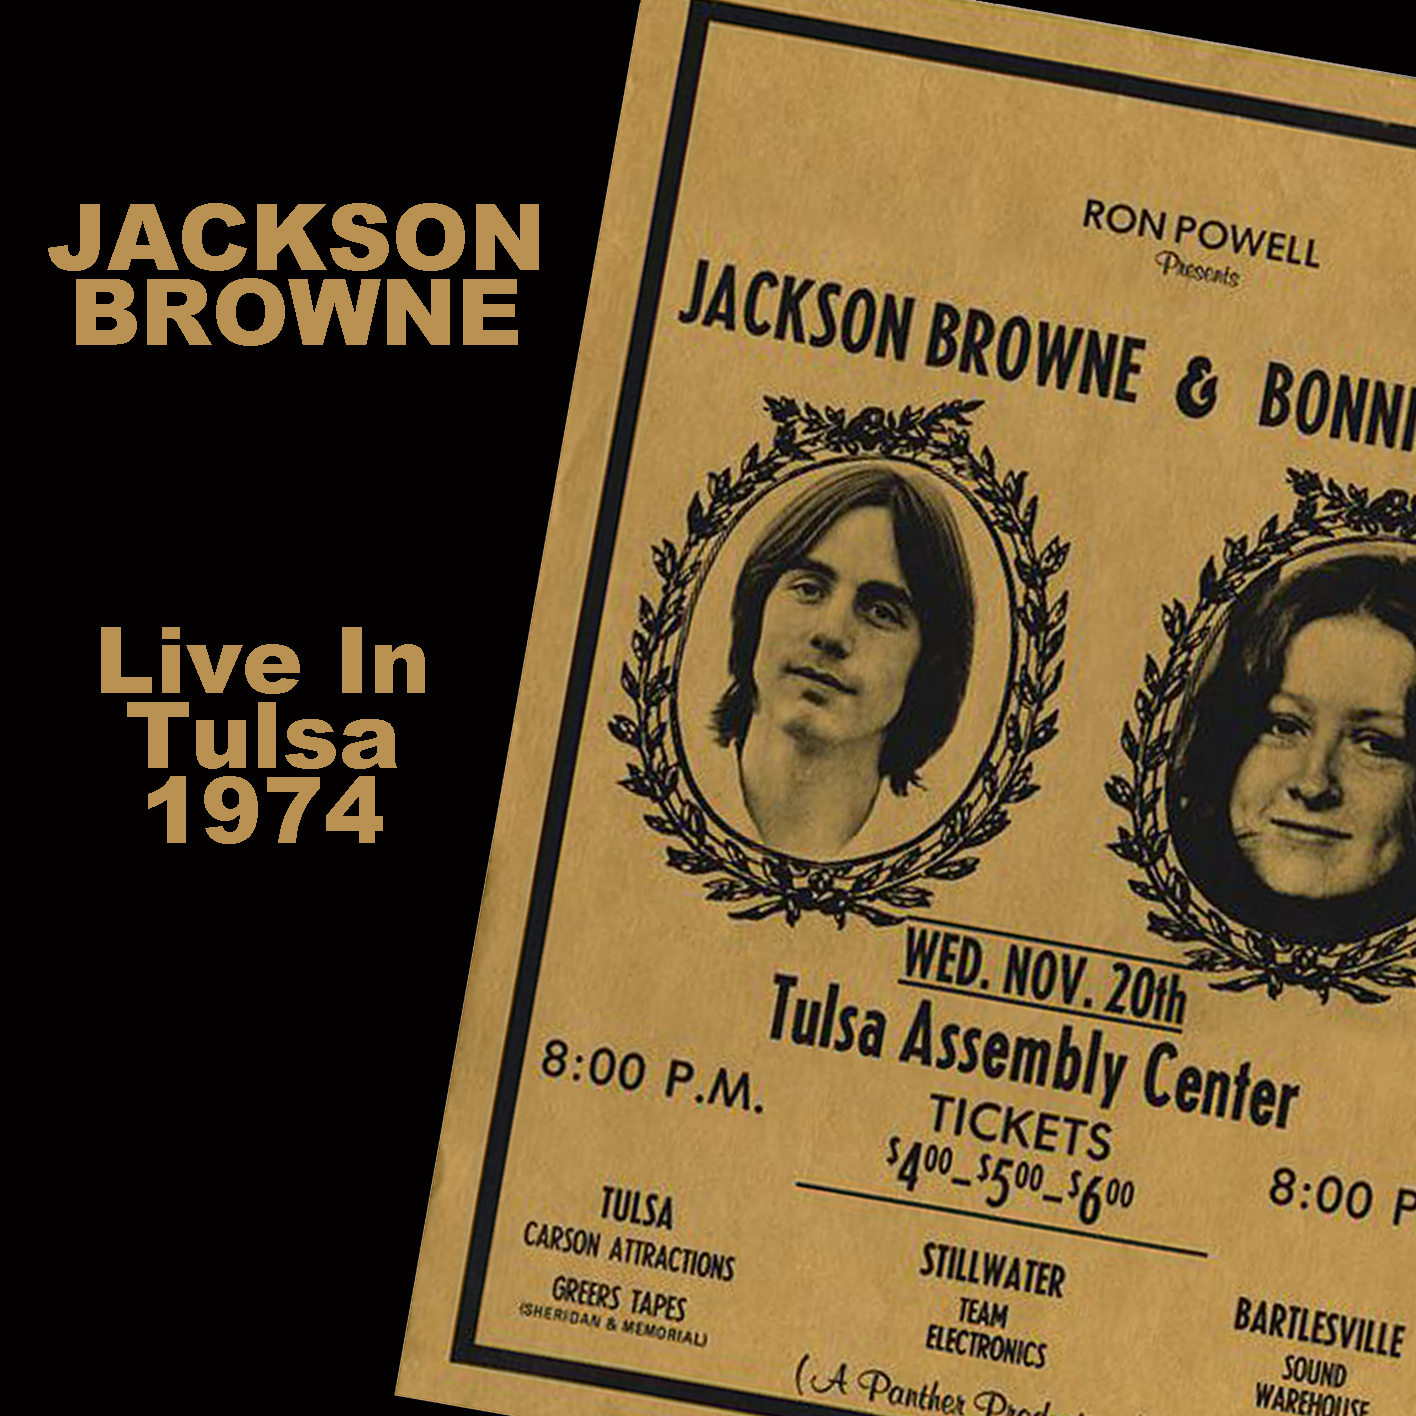 JacksonBrowne1974-11-20TulsaAssemblyCenterOK (1).jpg